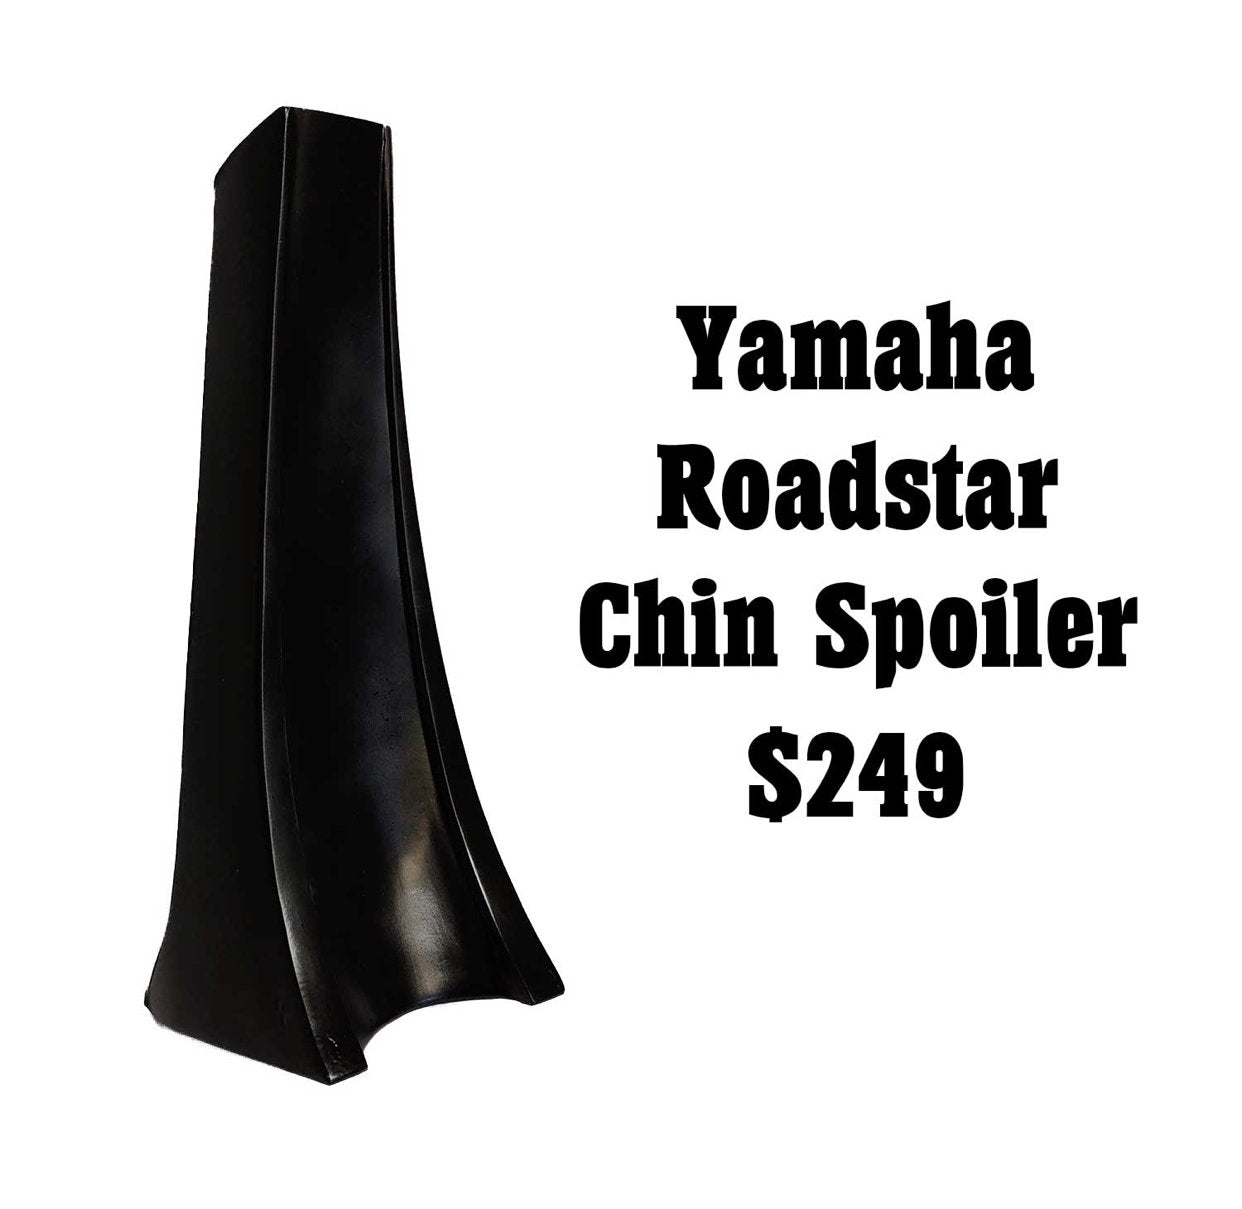 Yamaha Chin Spoiler - The "Roadstar Steel" Series Chin Spoiler fits Yamaha Roadstar